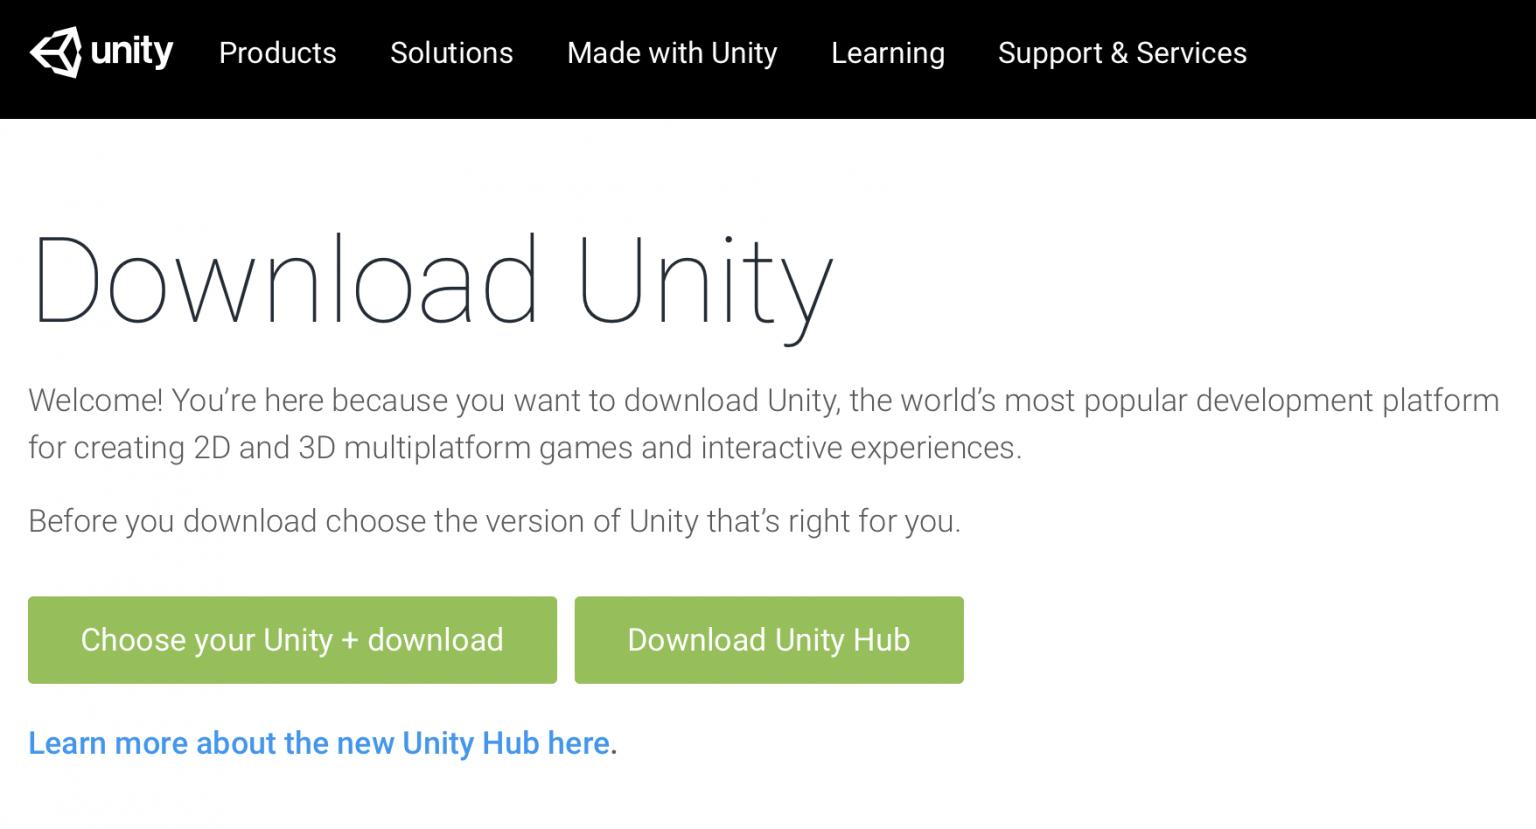 unity hub download windows